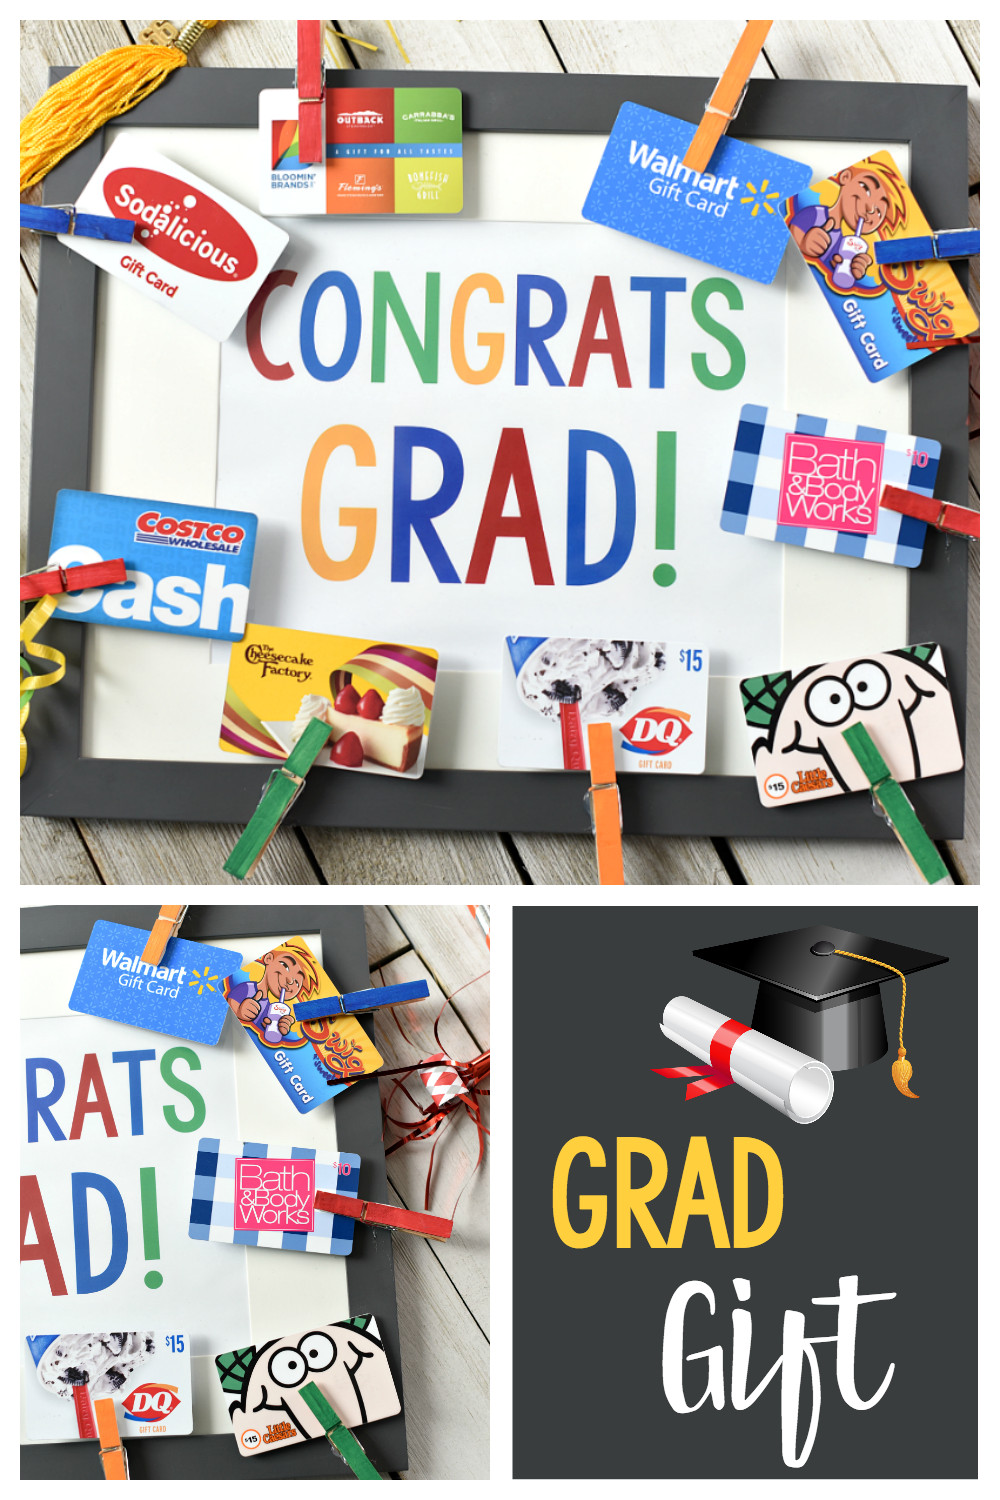 Gift Ideas High School Graduation
 Cute Graduation Gifts Congrats Grad Gift Card Frame – Fun